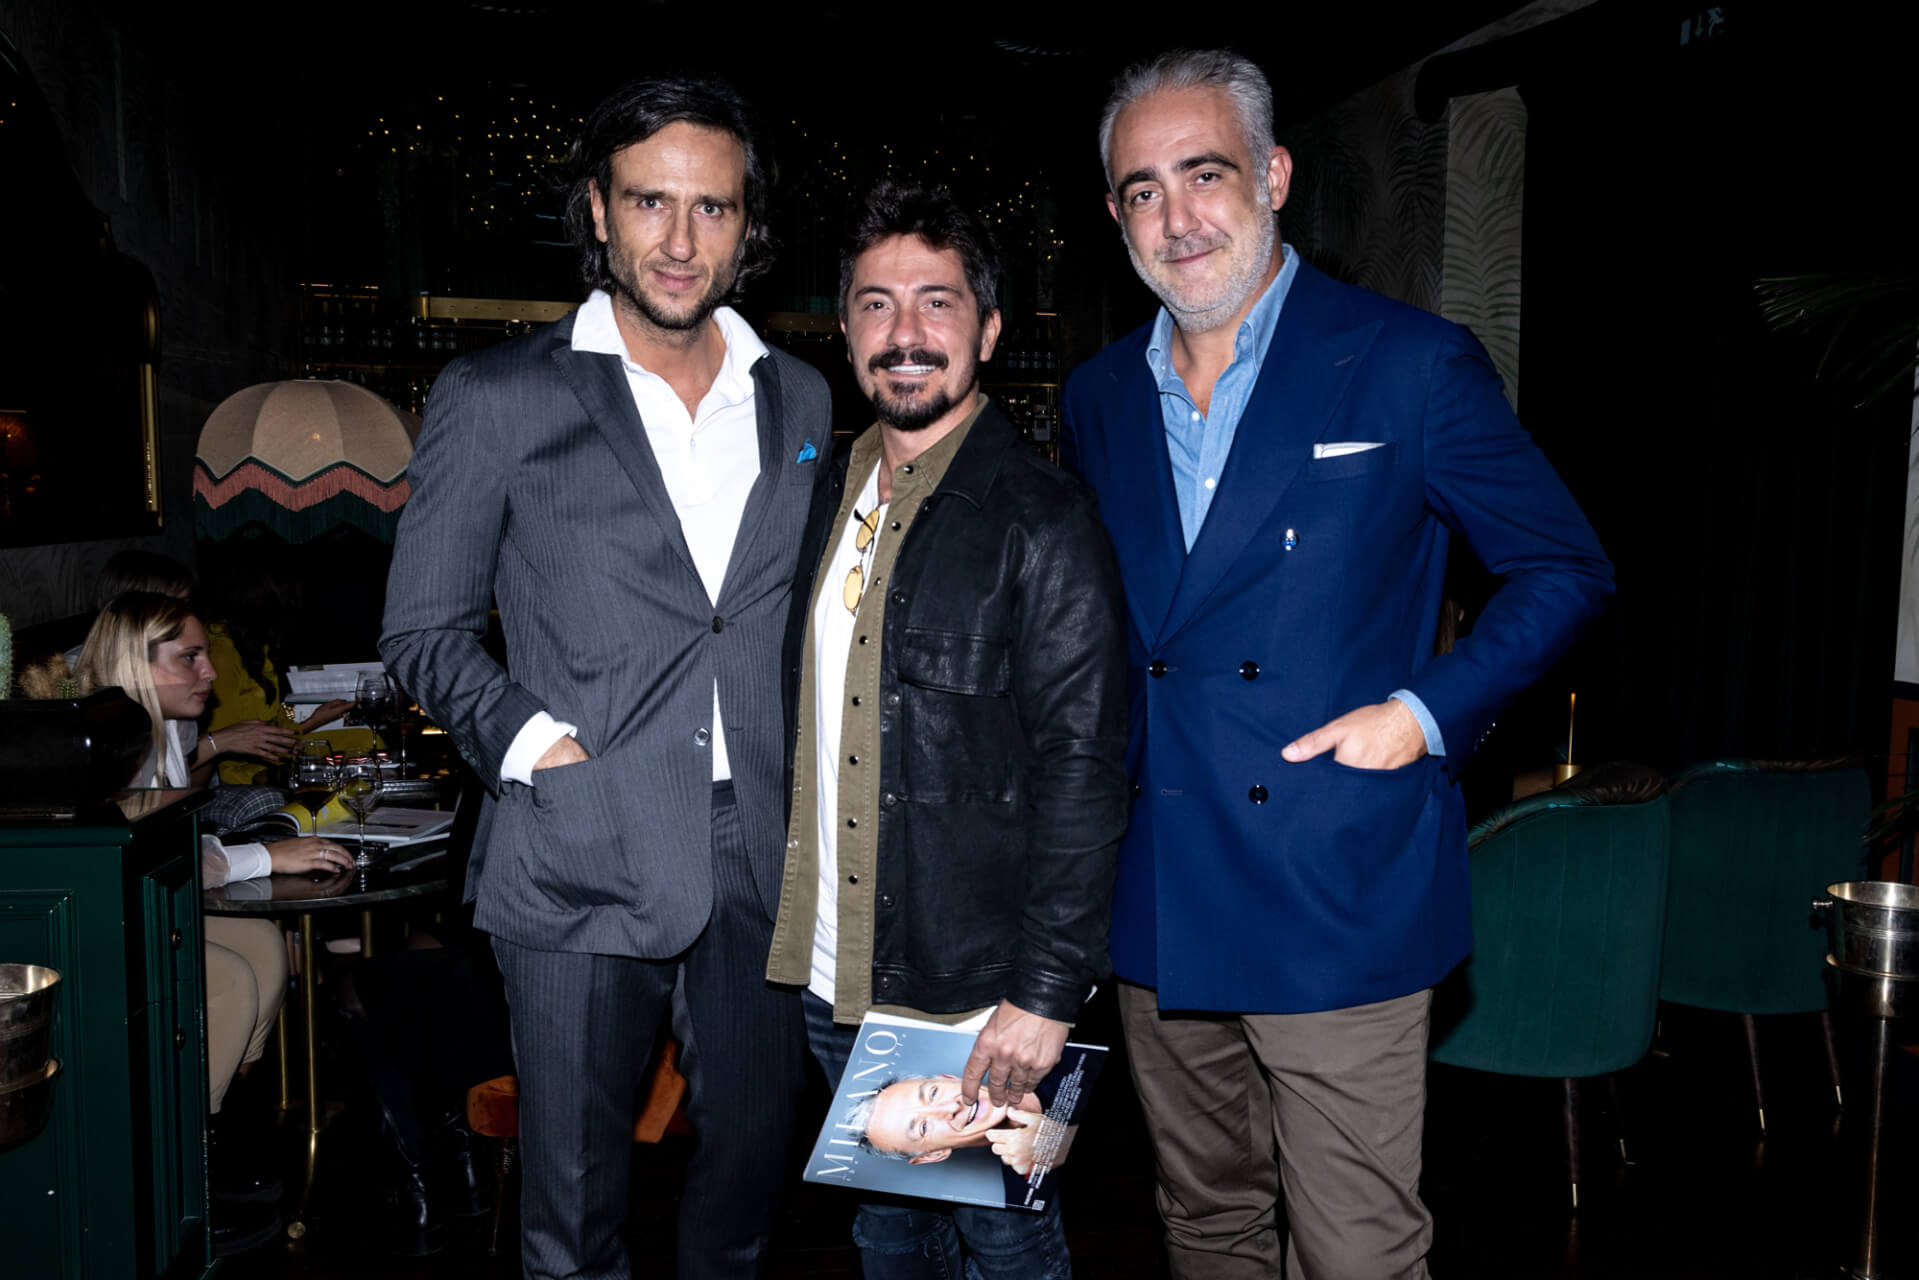 Alex Vittorio Lana, Mimmo Gravino and Matteo Parigi Bini